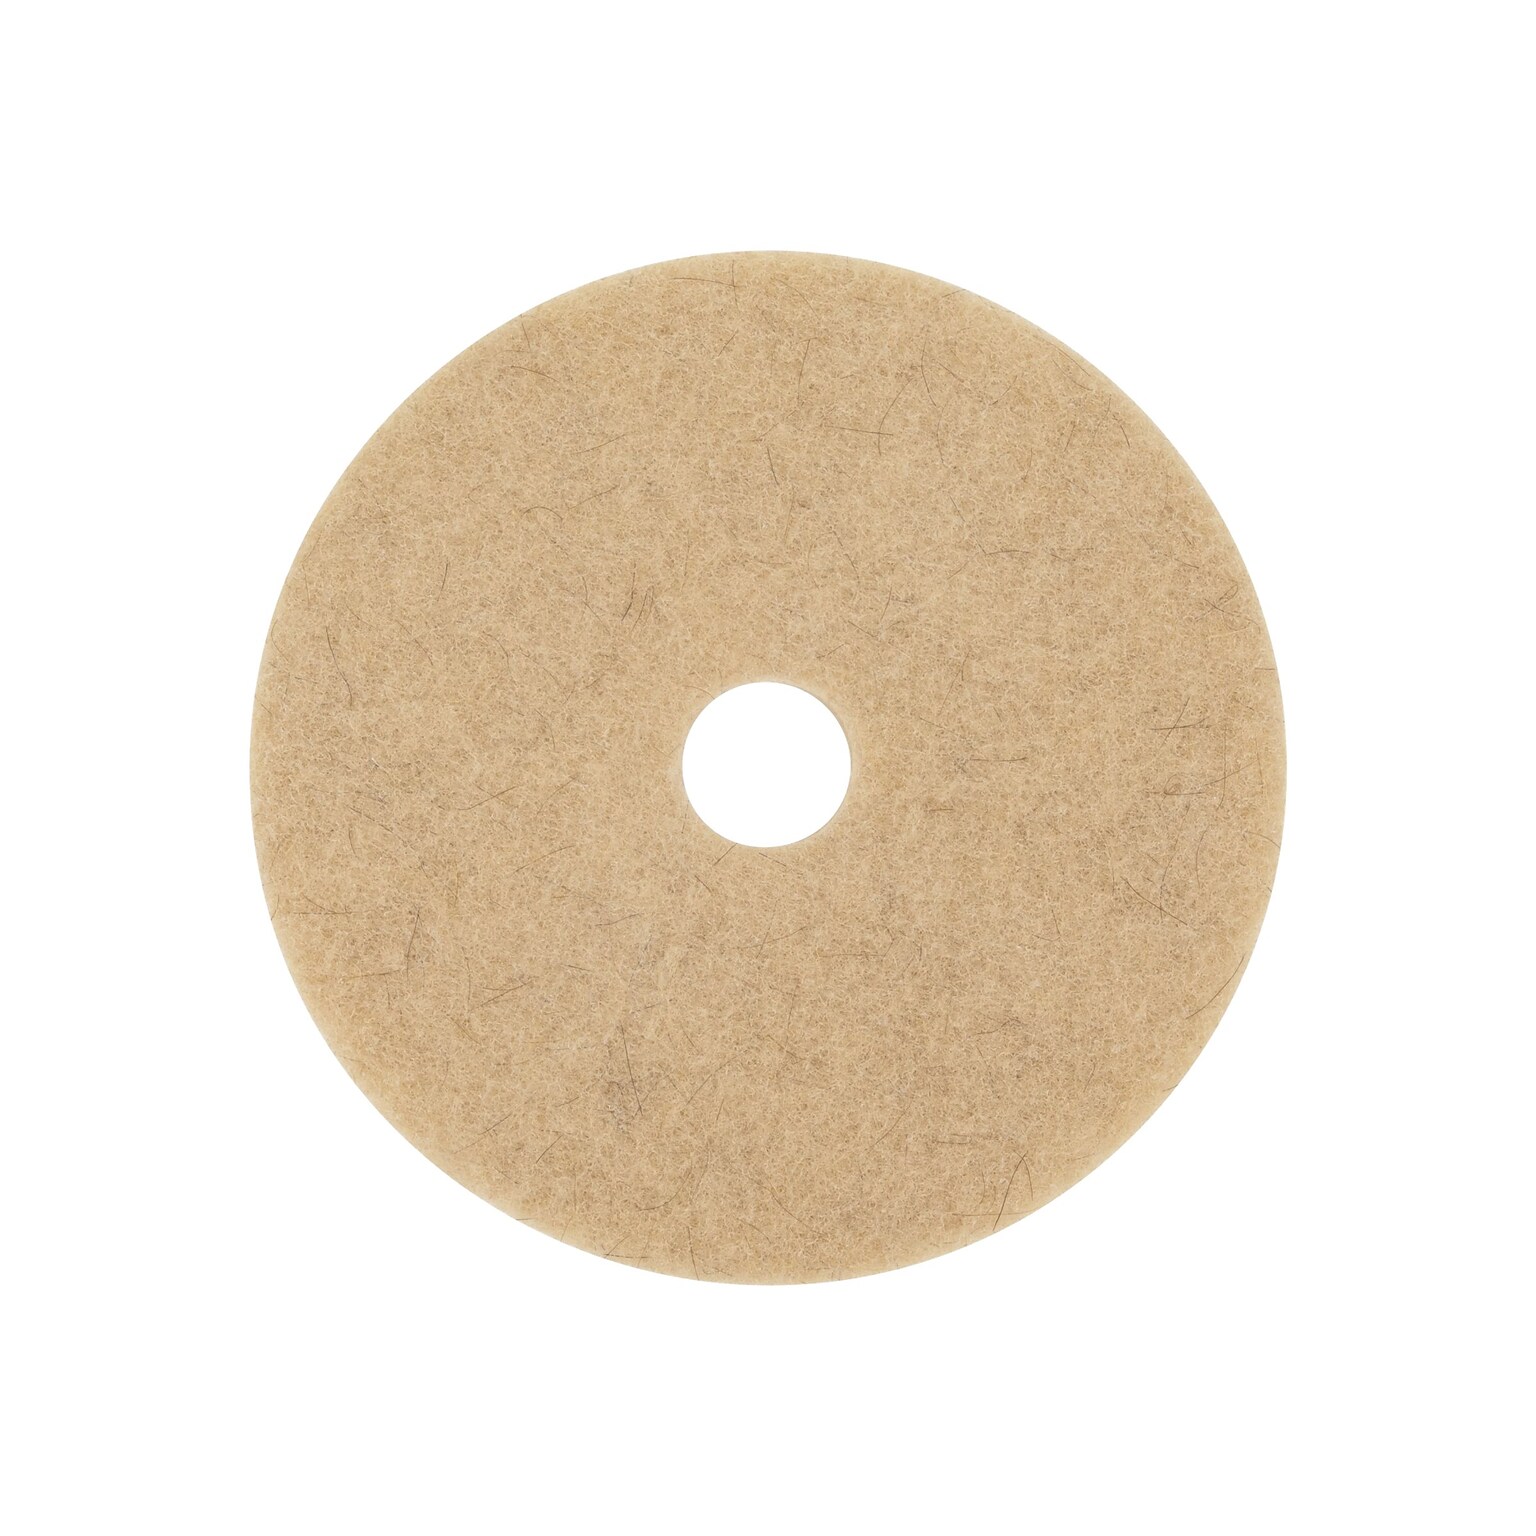 3M 20 Natural Blend Burnish Floor Pad, Tan, 5/Carton (350020)